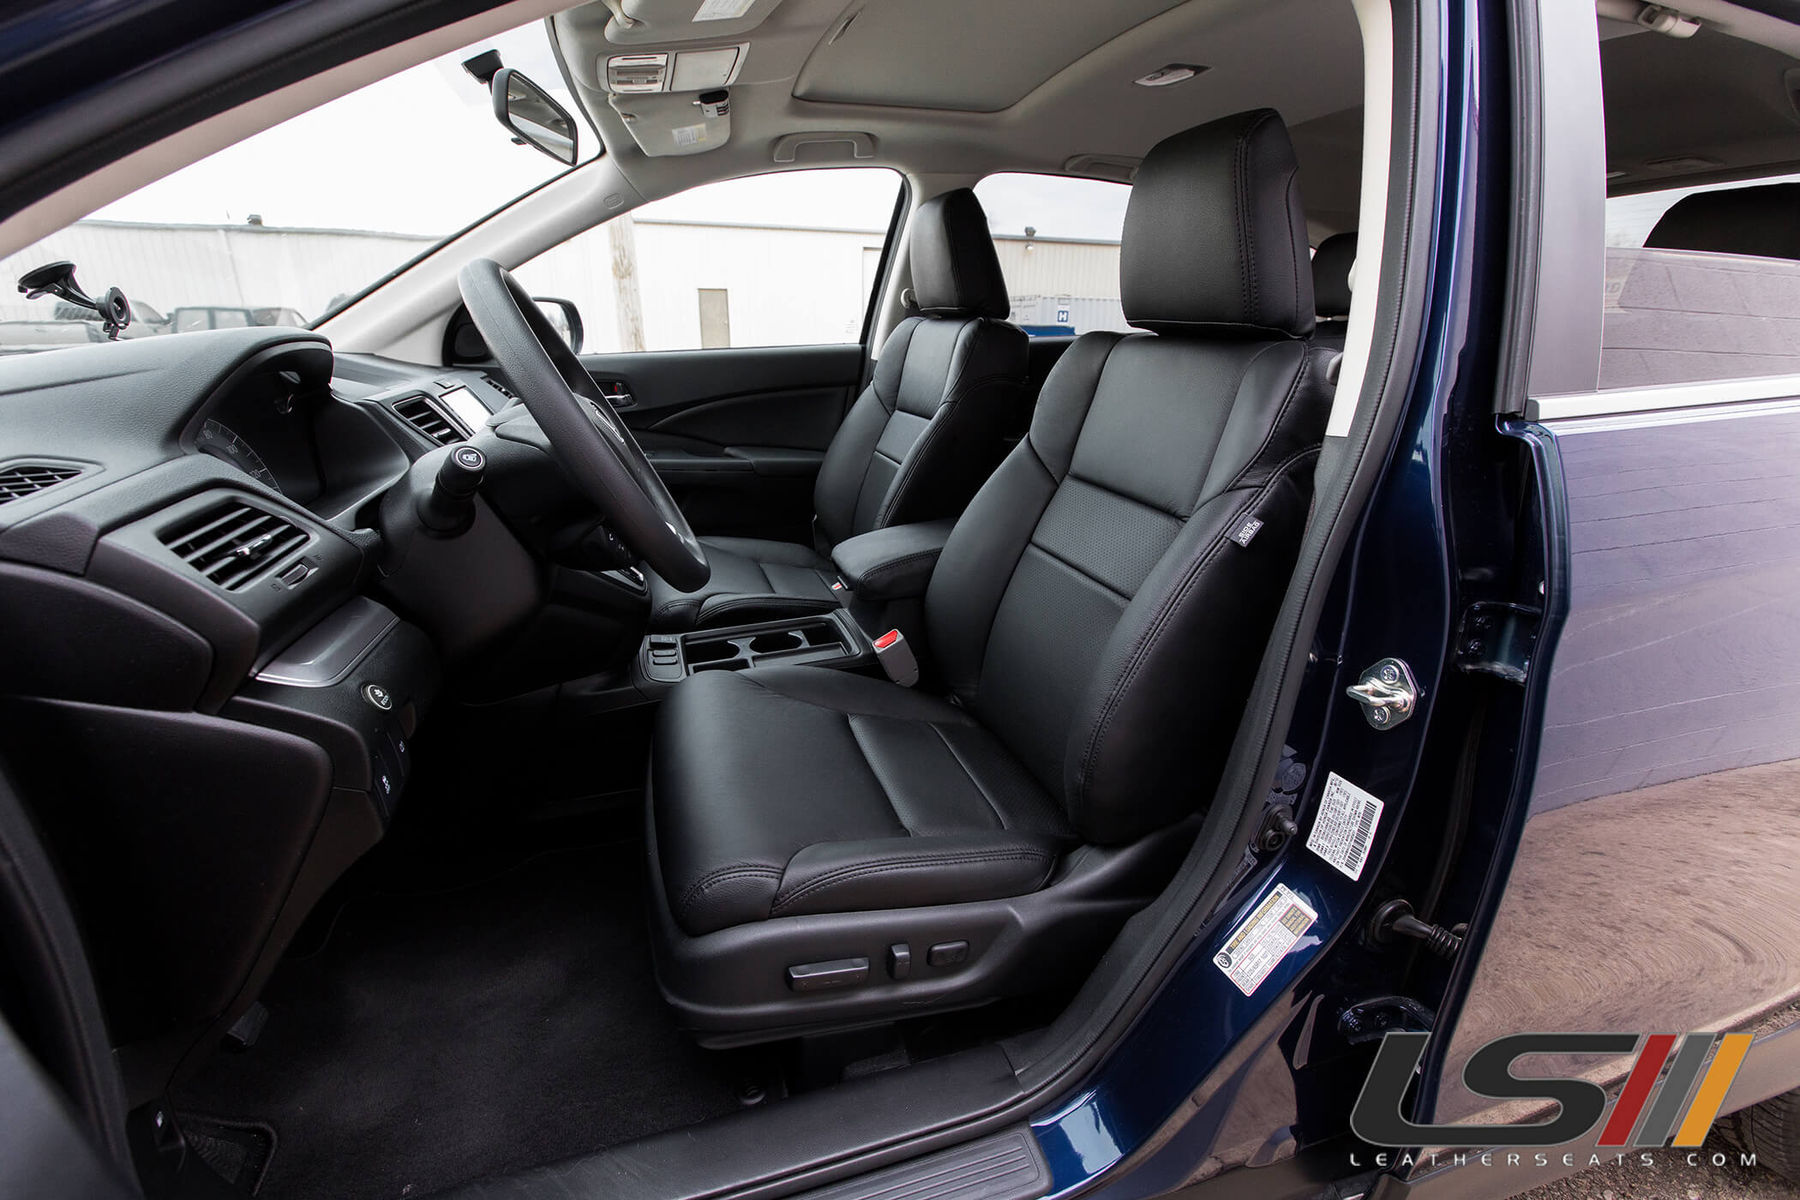 2015 Honda Cr V Interior By Leatherseats Com